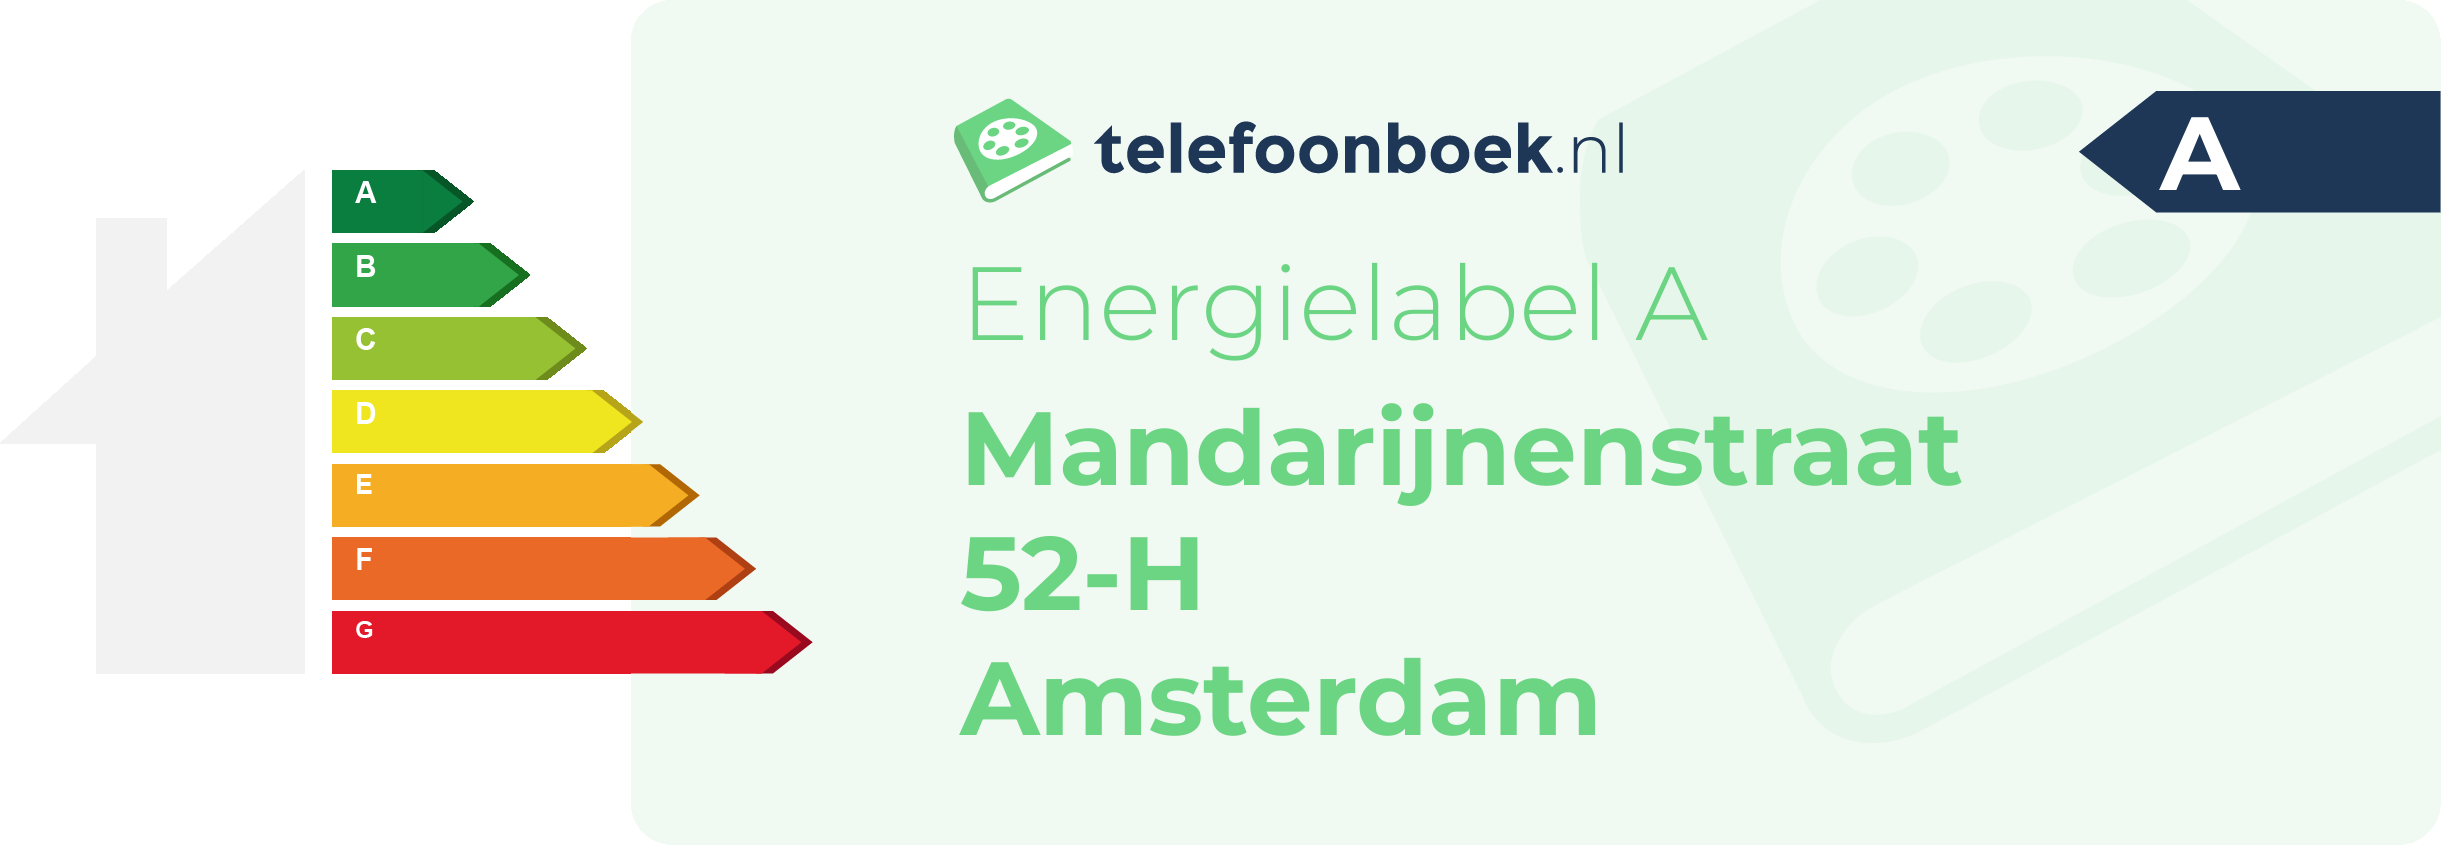 Energielabel Mandarijnenstraat 52-H Amsterdam